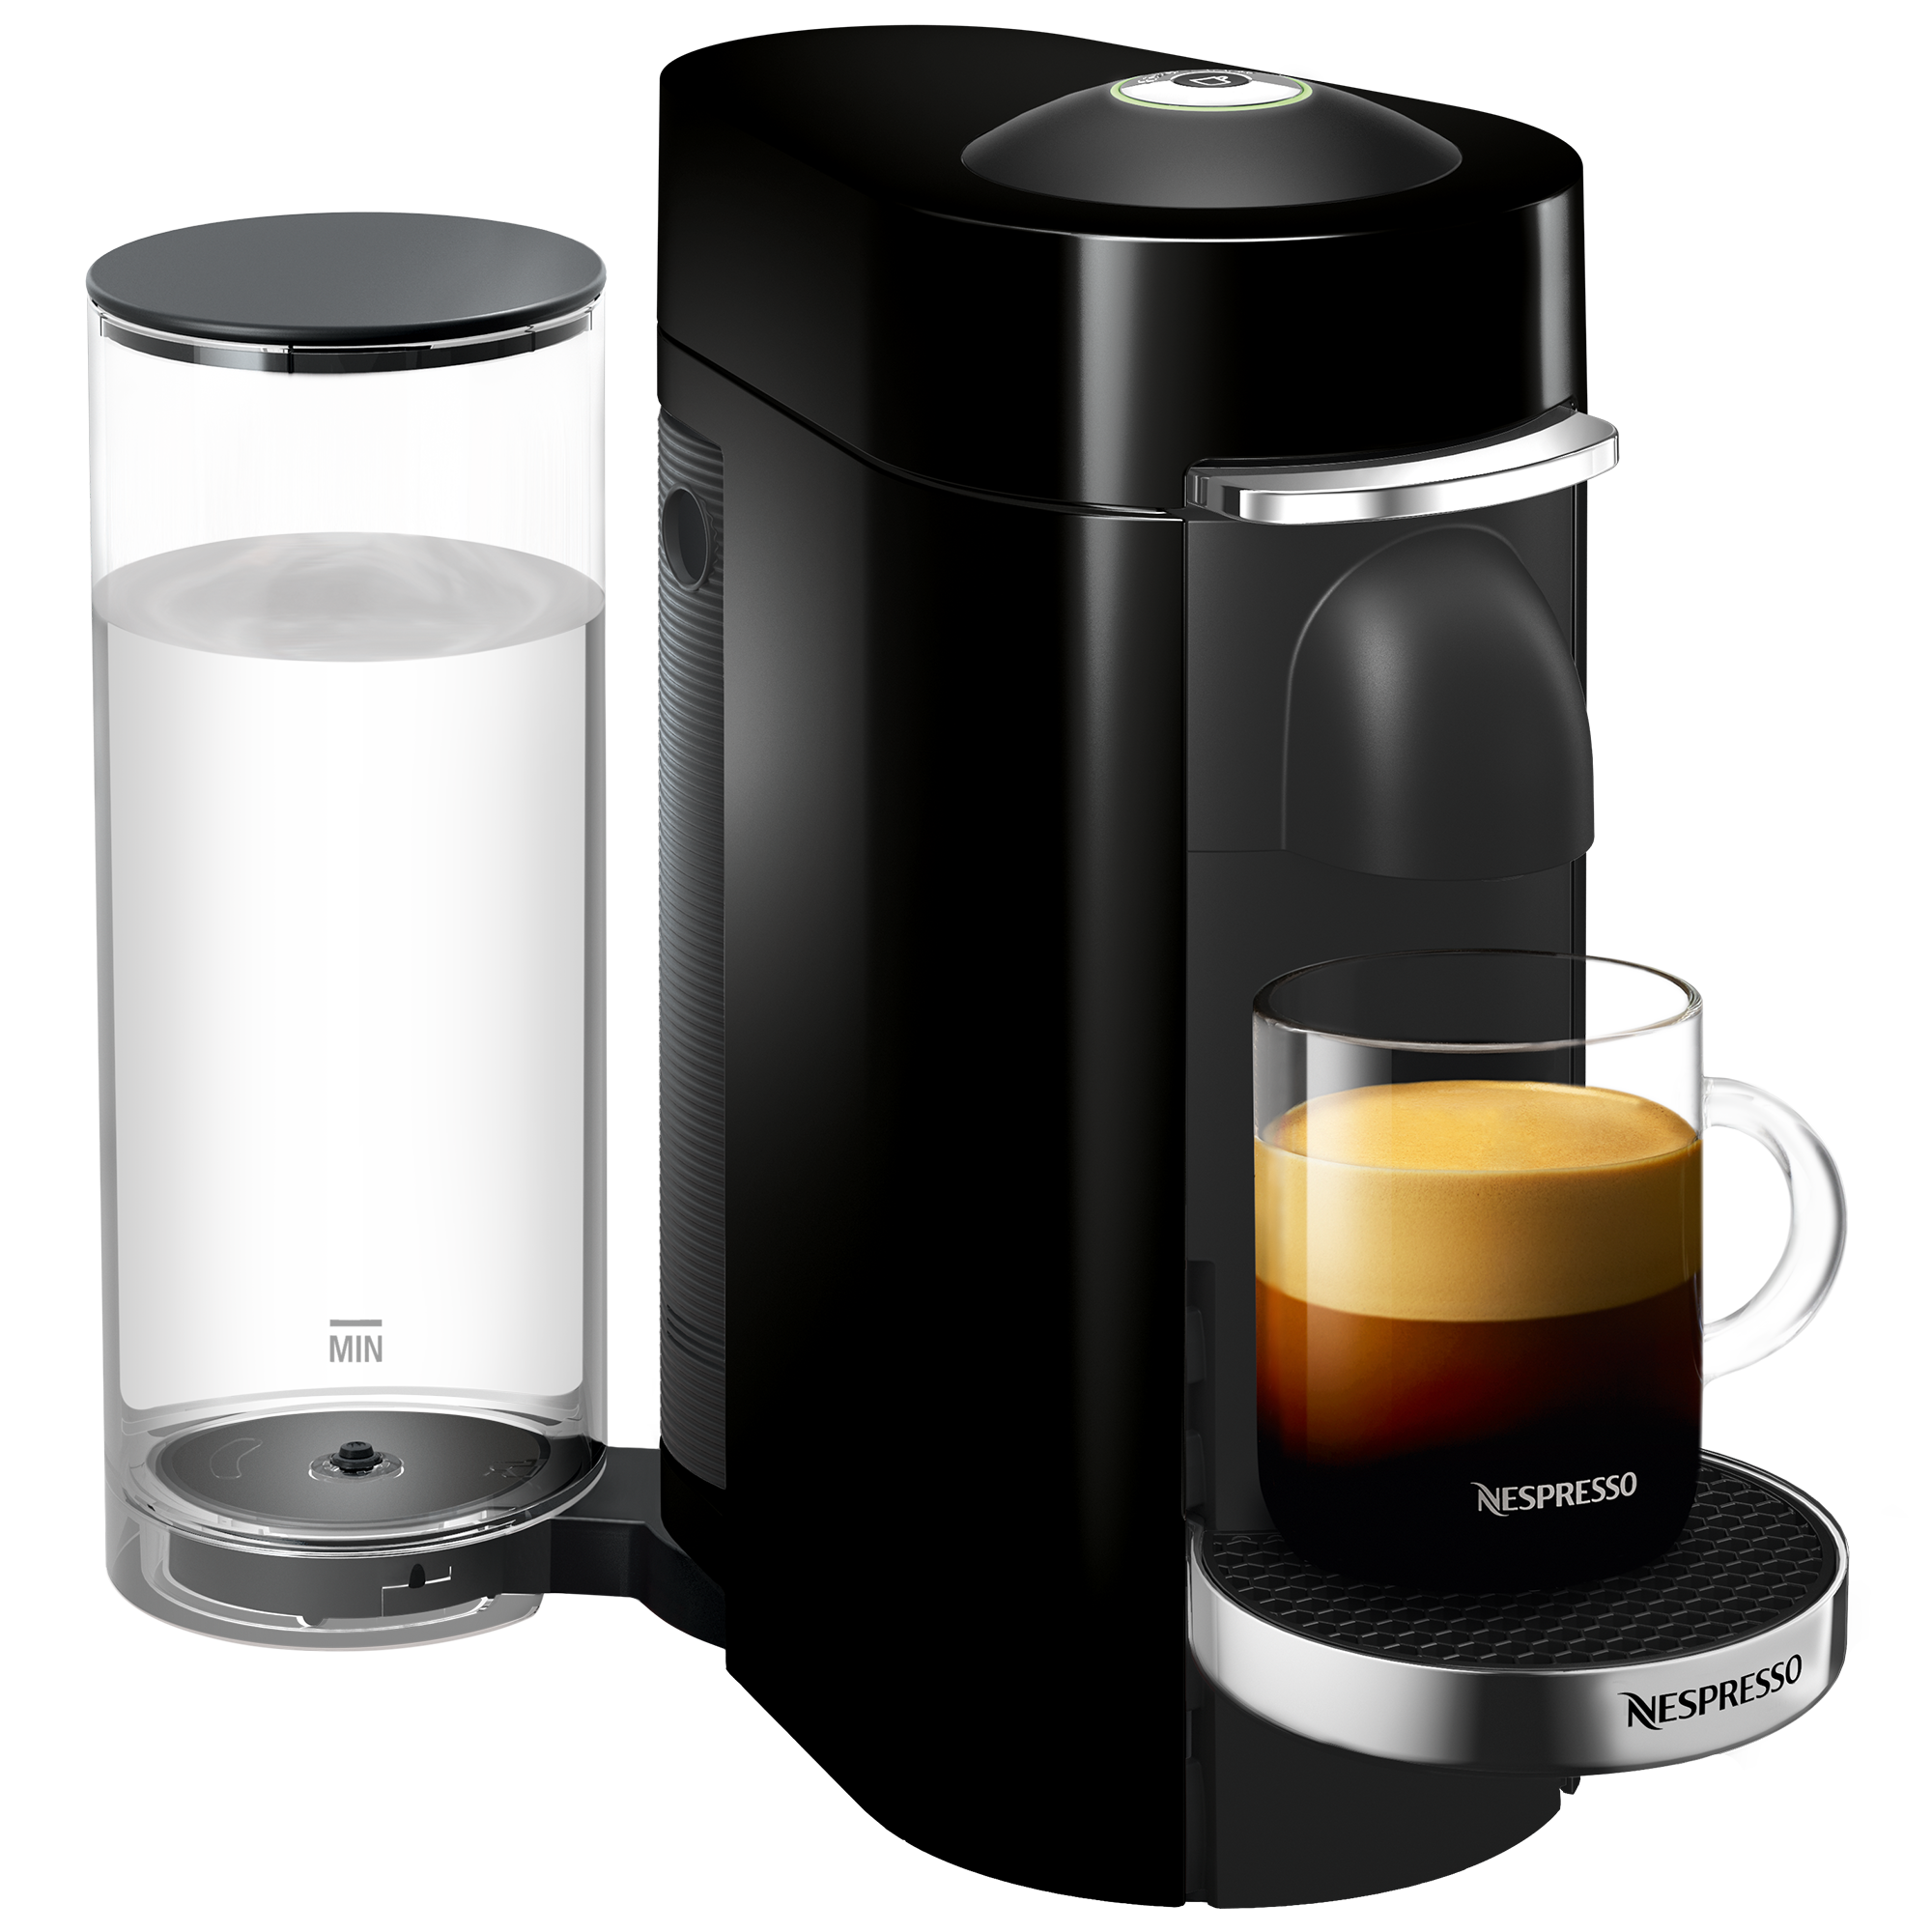 VertuoPlus Grey, Vertuo Coffee Machine